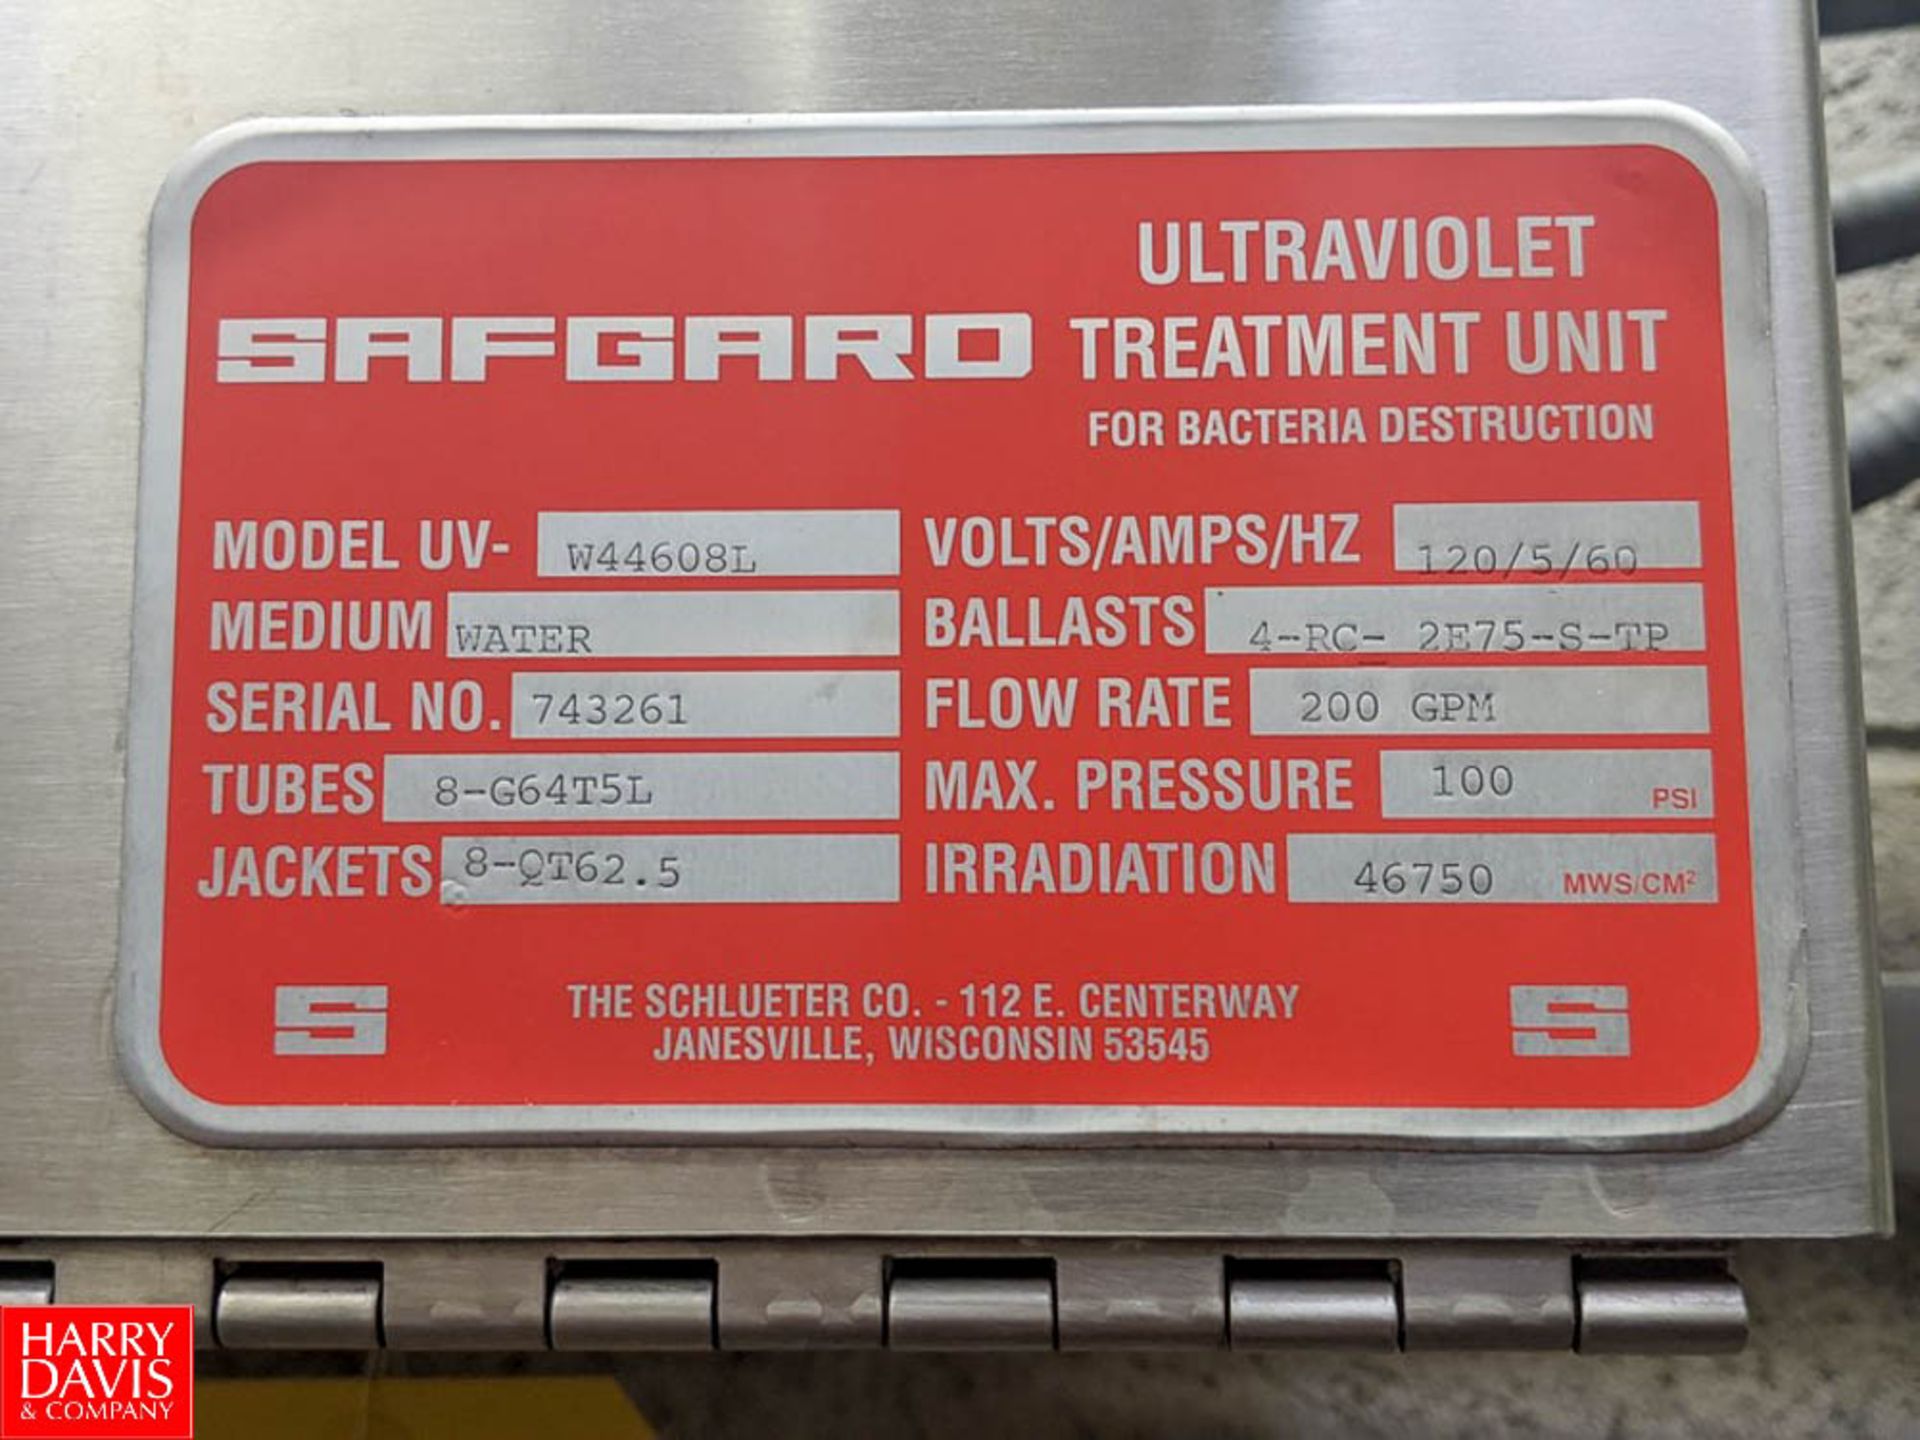 Safgard 200 GPM Ultraviolet Treatment Unit for Bacteria Destruction Model UV-W44608L : SN 743261 - Image 4 of 4